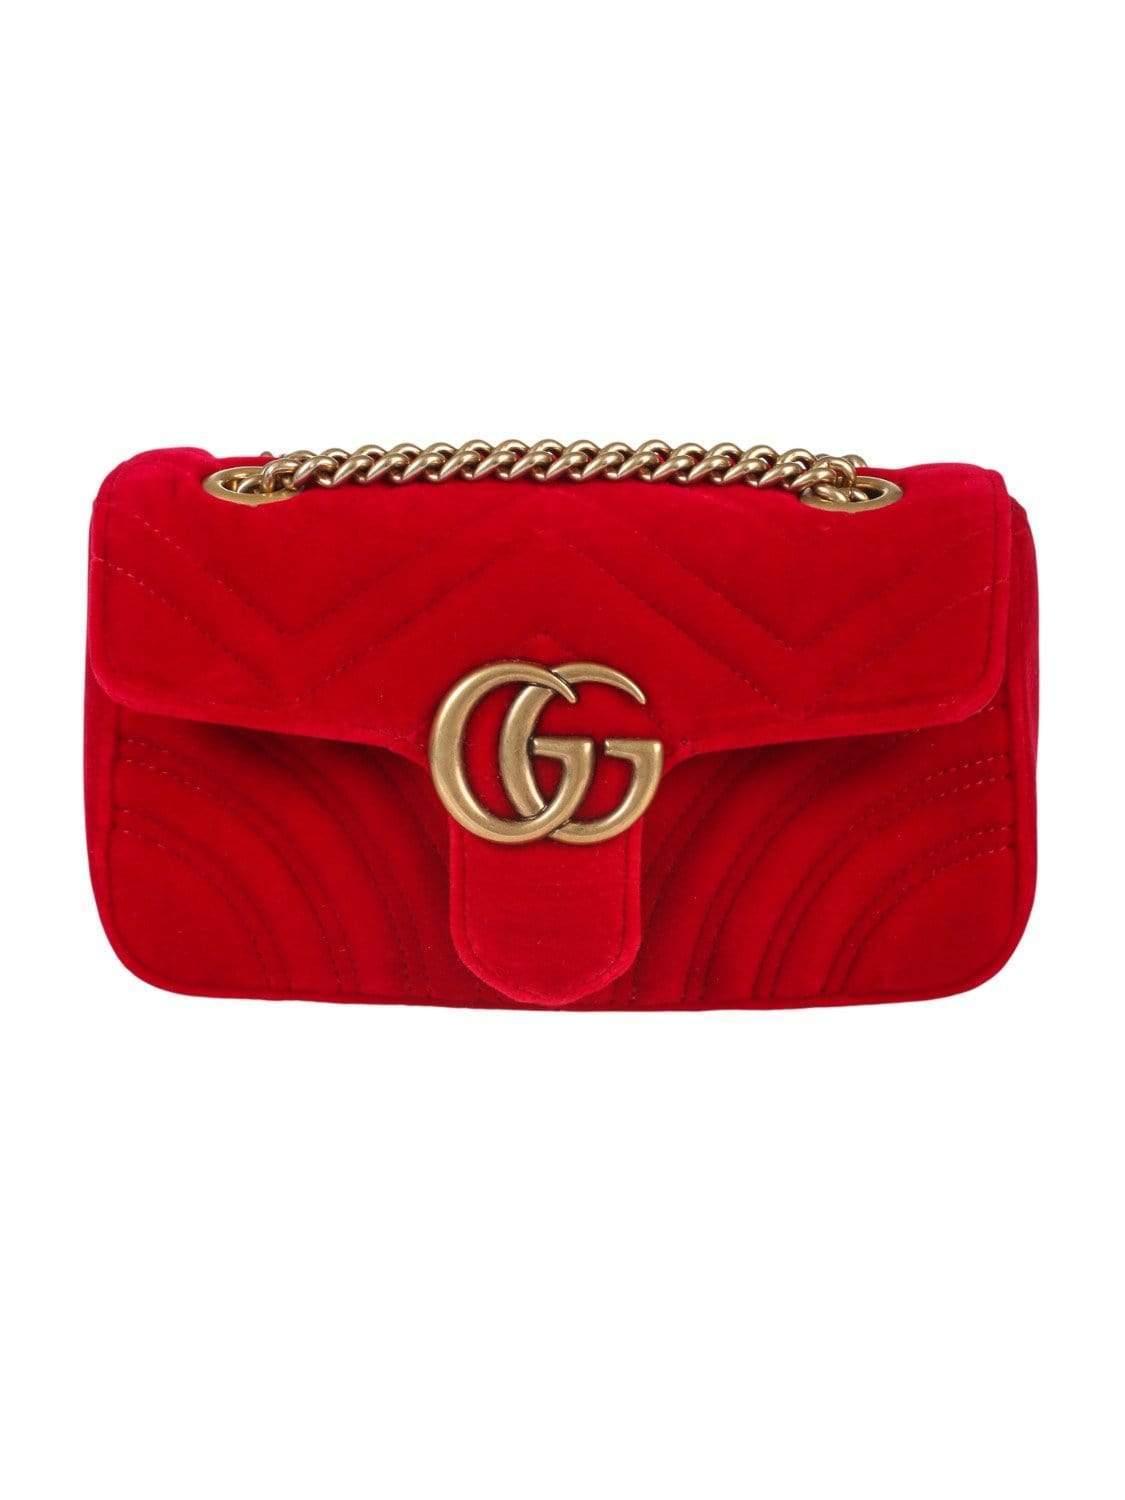 gucci red velvet purse